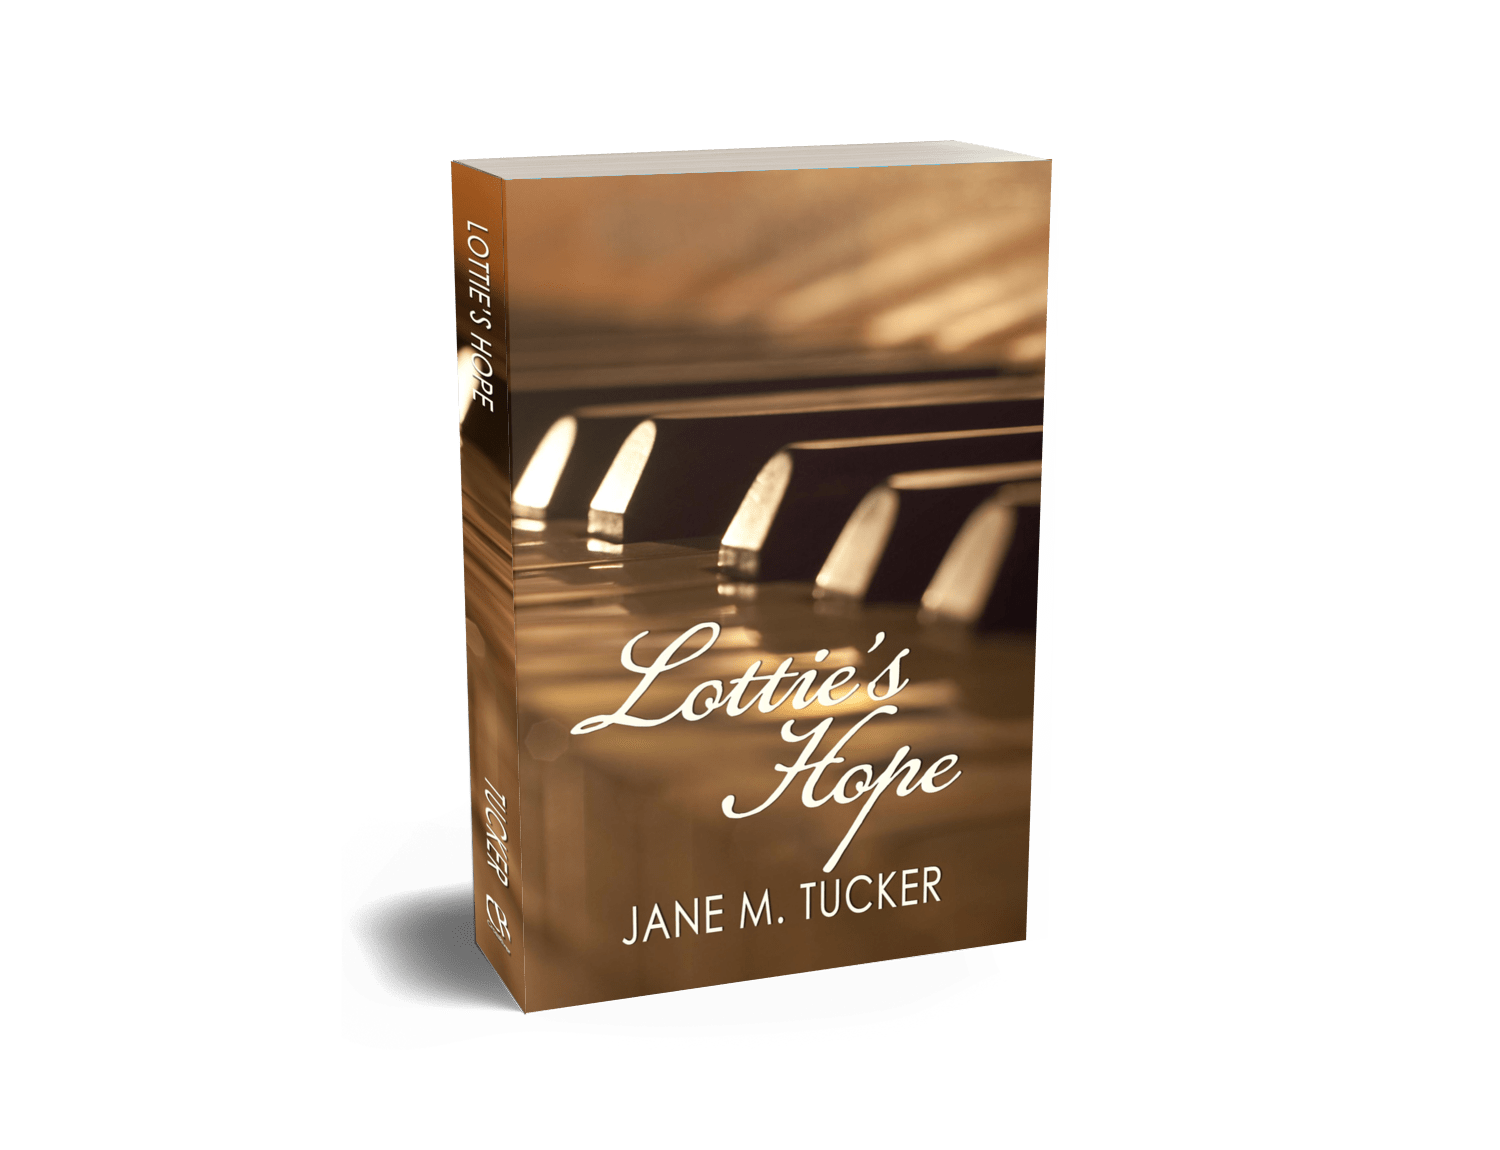 Lottie's Hope by Jane M Tucker from Christian publisher CrossRiver Media